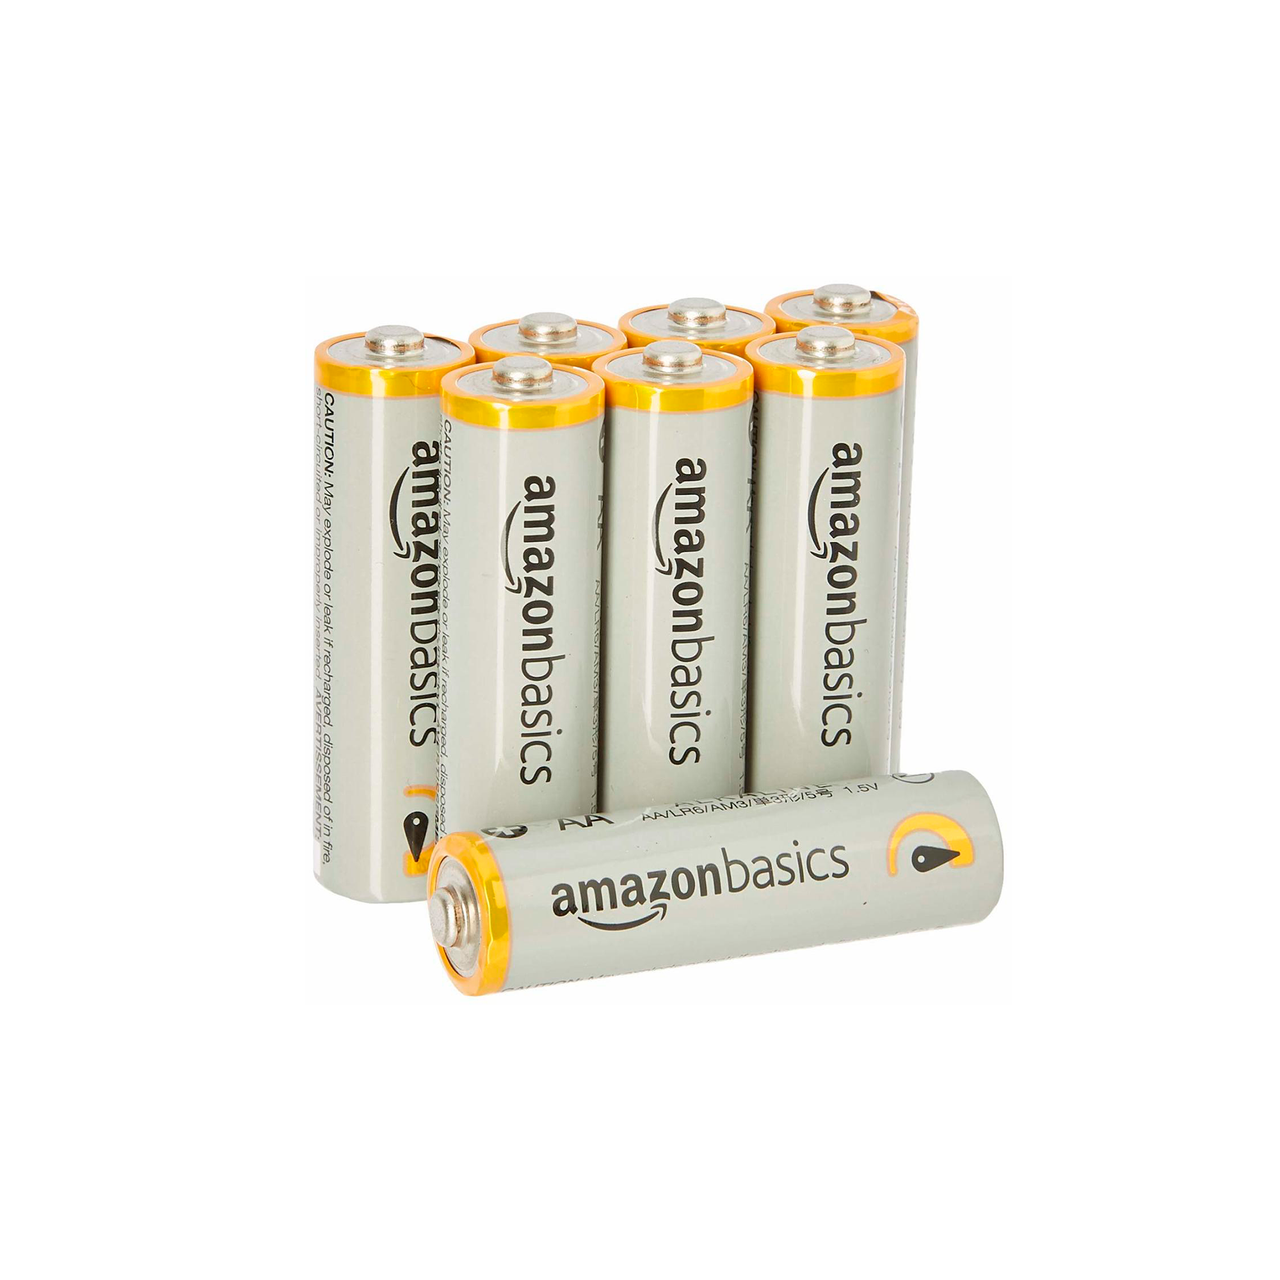 Amazon Basics 5 Pack AA Alkaline Batteries Pack